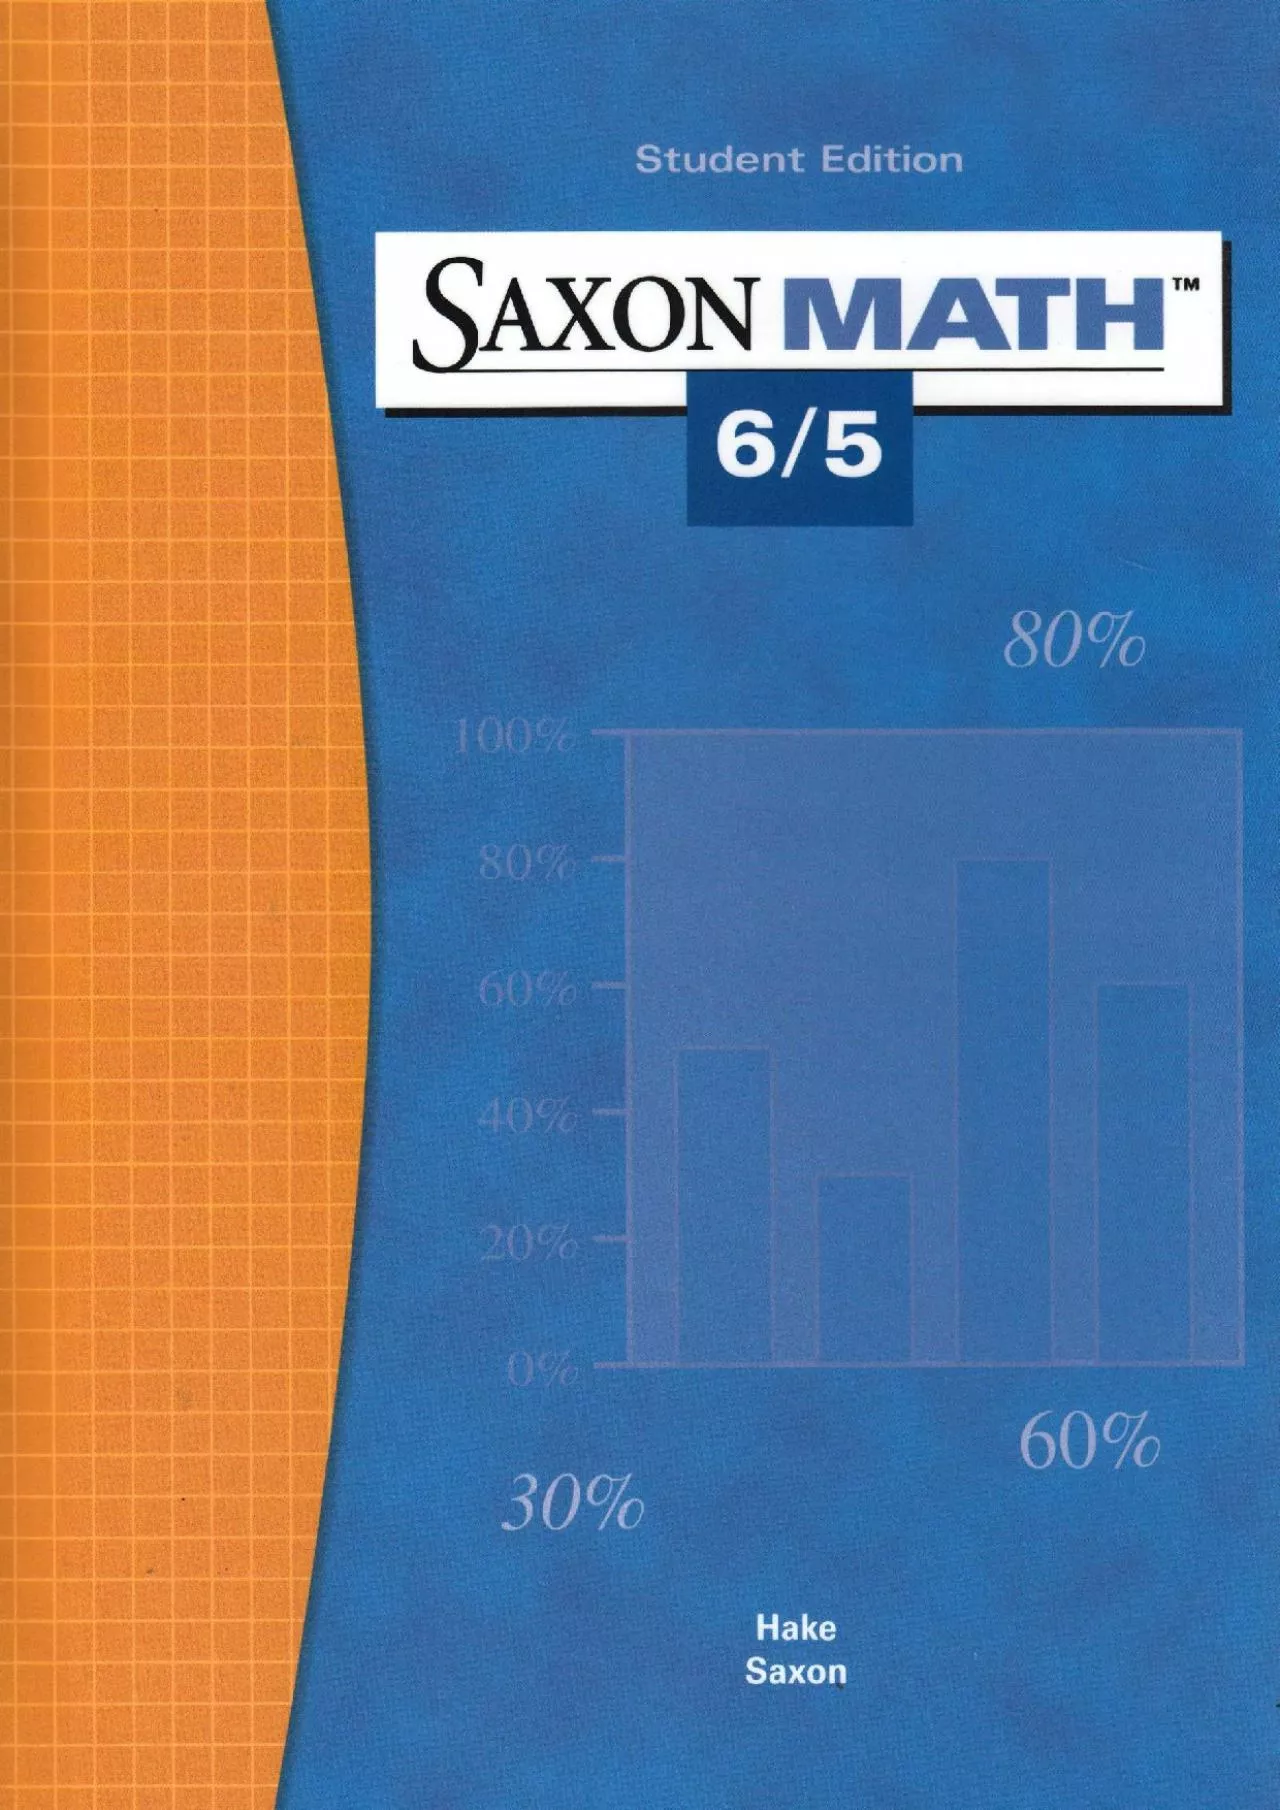 [READ] Student Edition 2004 (Saxon Math 6/5)